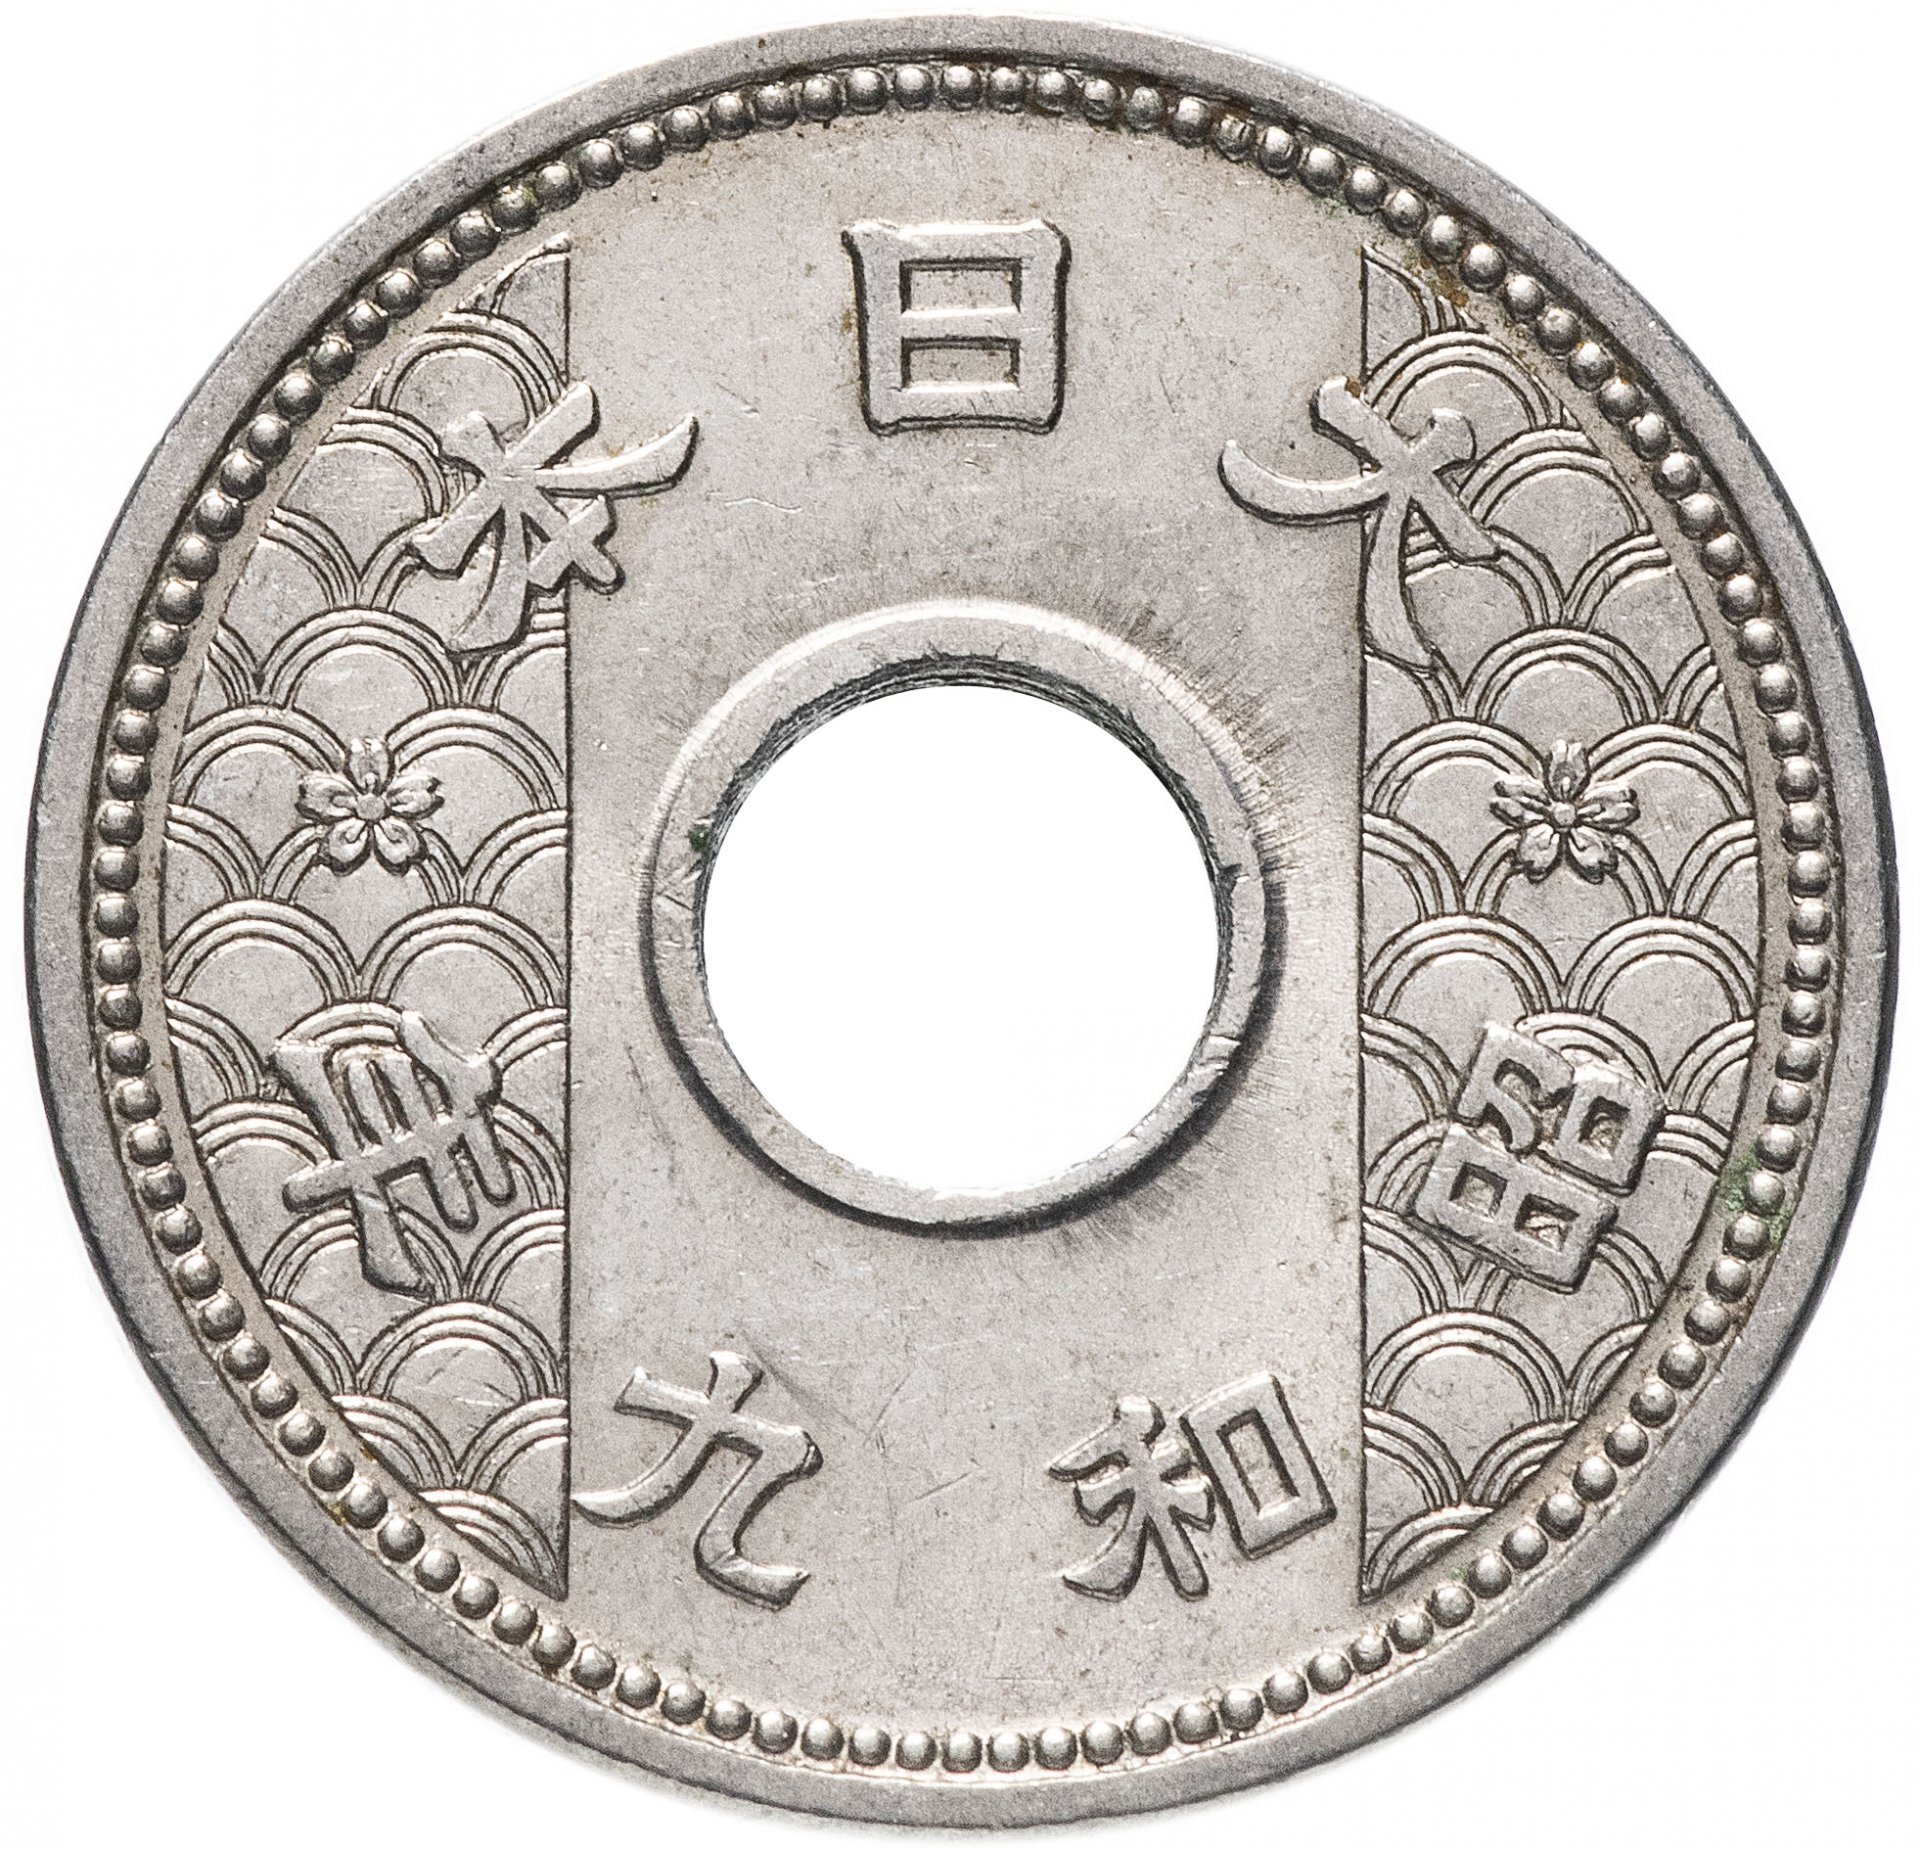 Деньги сена. Монета 10 сен Япония. Японская йена монеты. Японские монеты современные. Первые японские монеты.